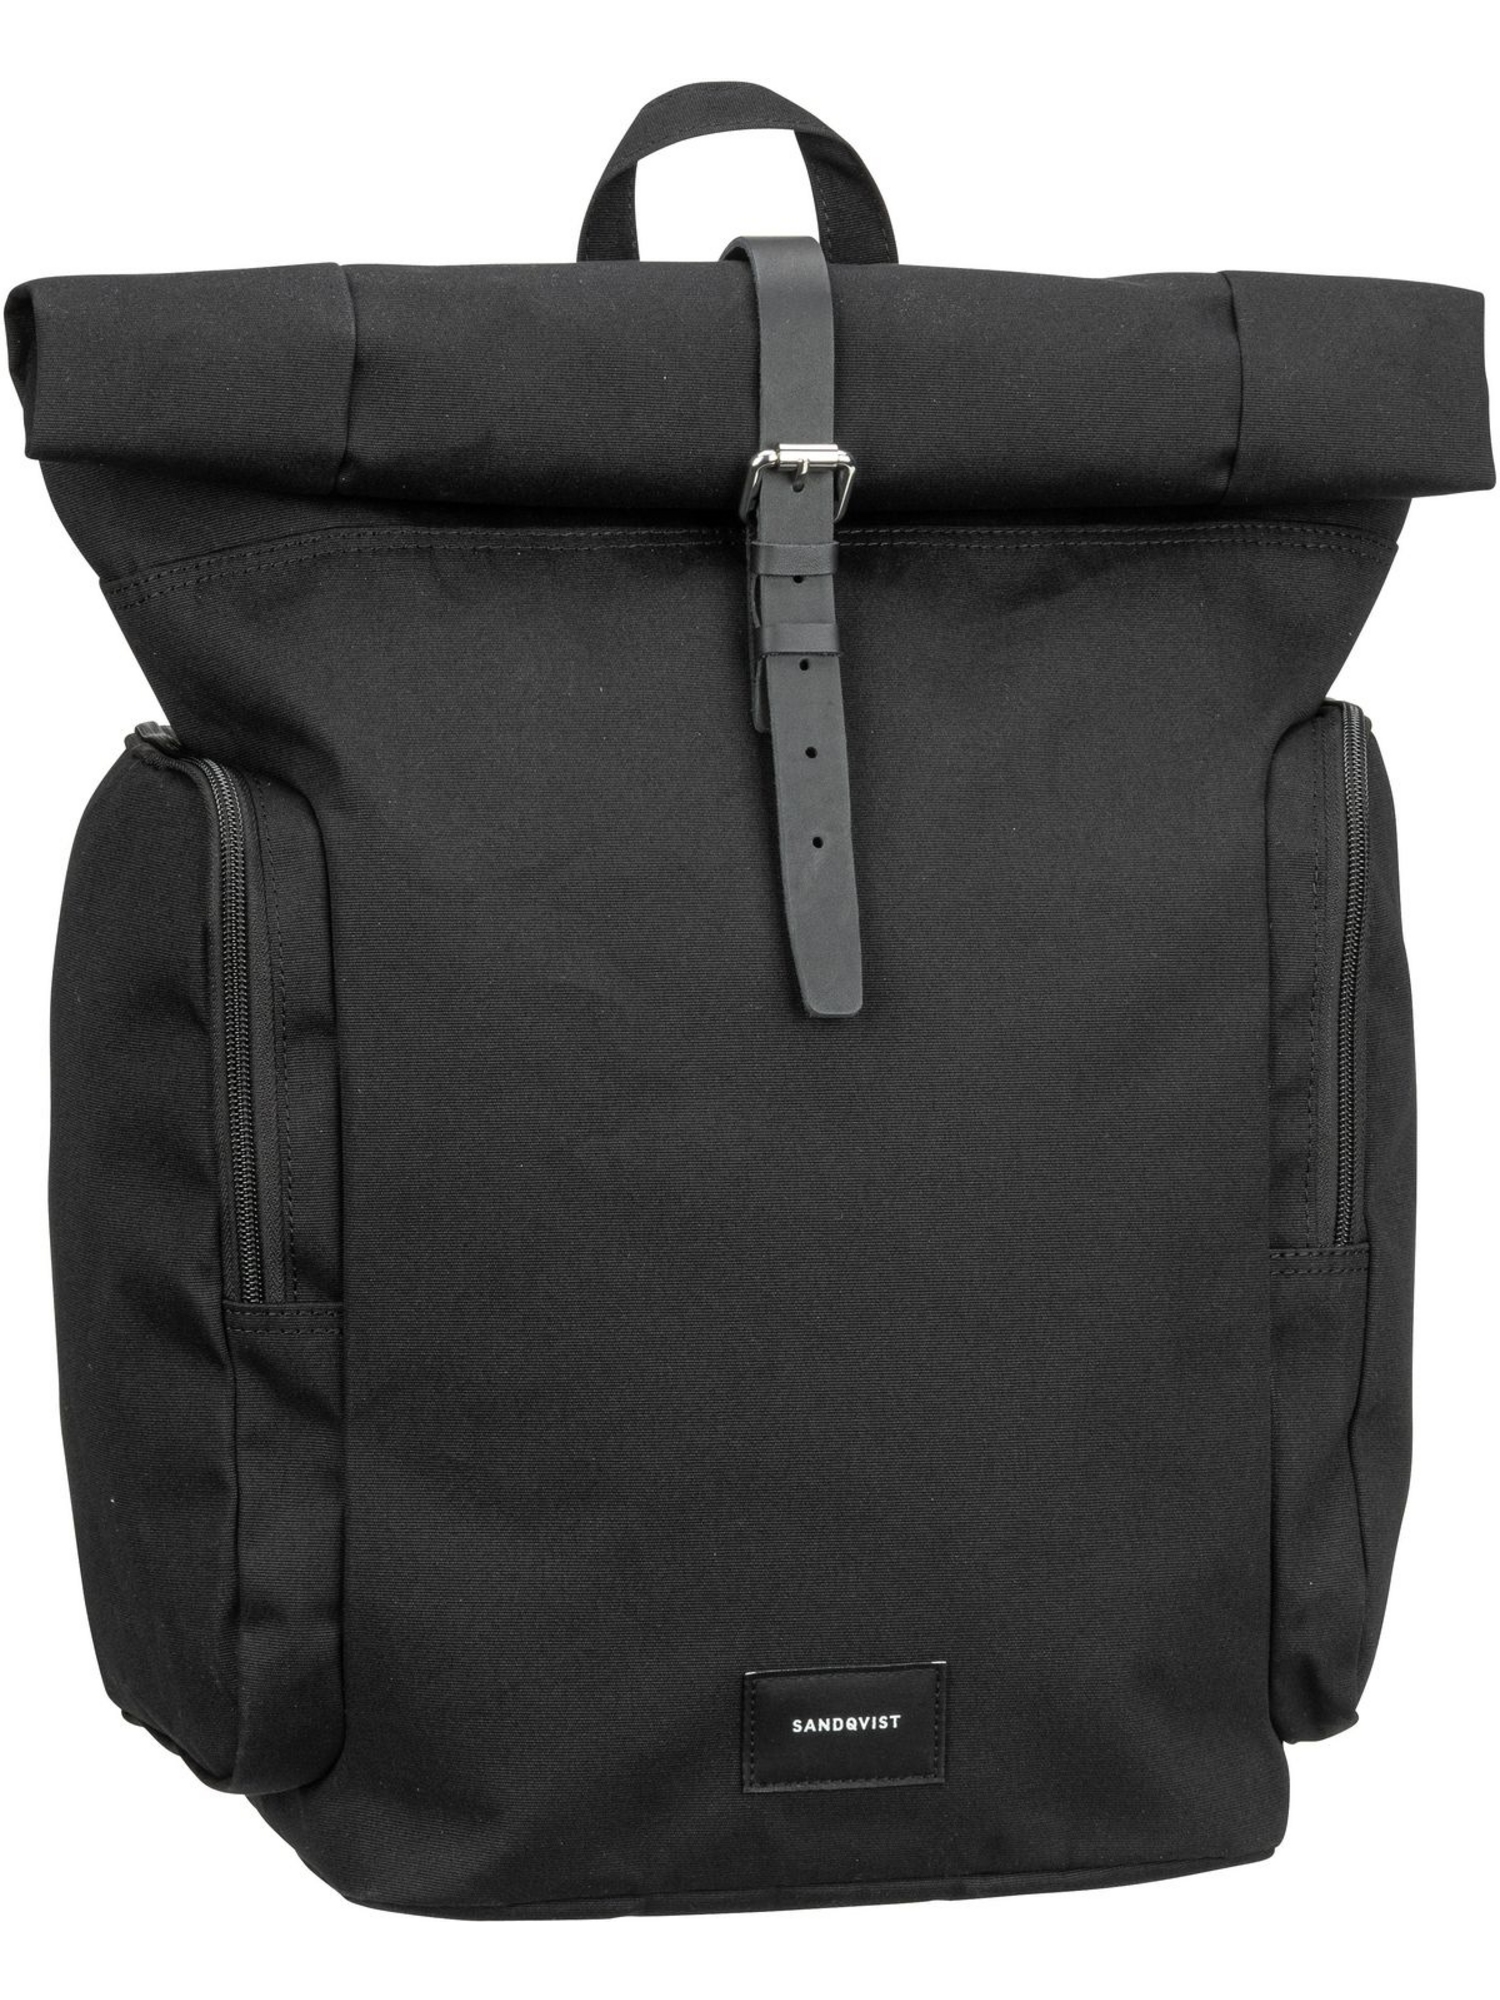 Рюкзак SANDQVIST Rolltop Axel Rolltop Backpack, черный рюкзак sandqvist backpack ilon rolltop backpack темно синий